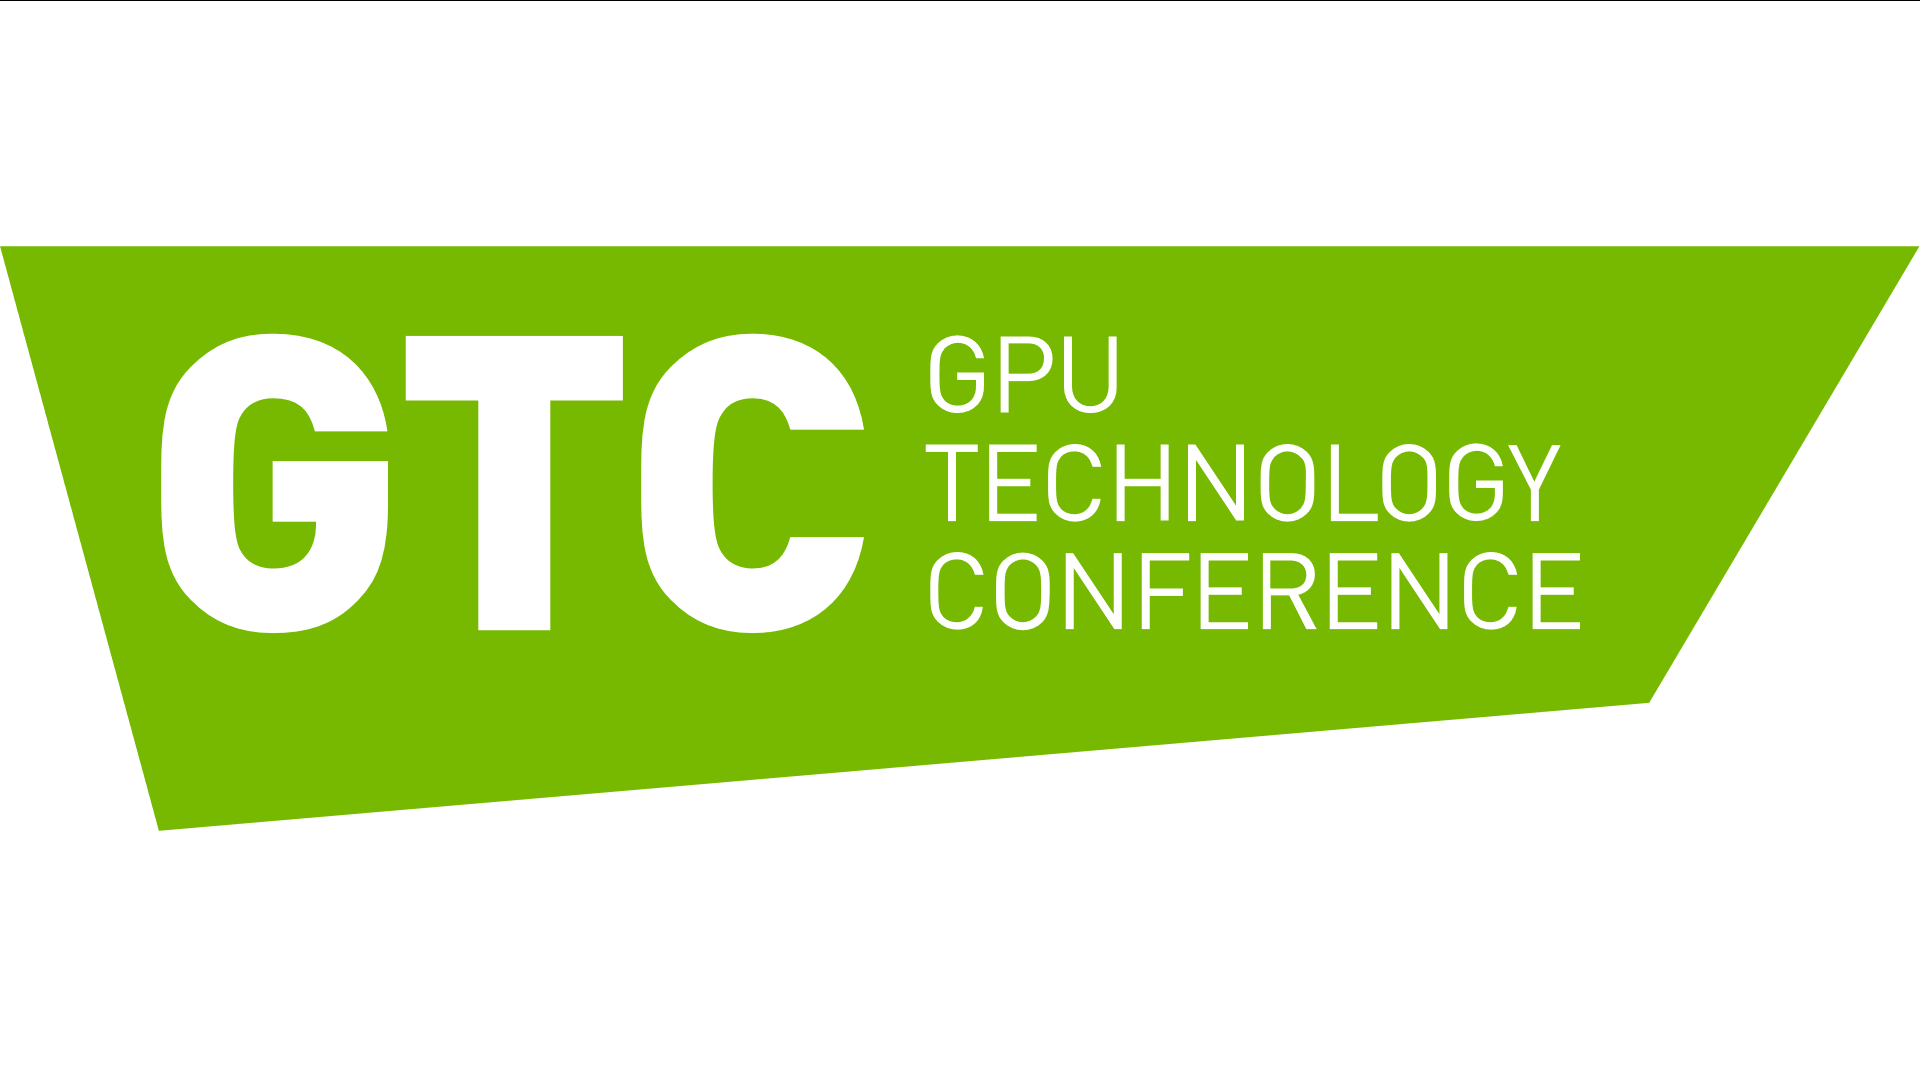 NVIDIA announces details on its GTC 2020 conference